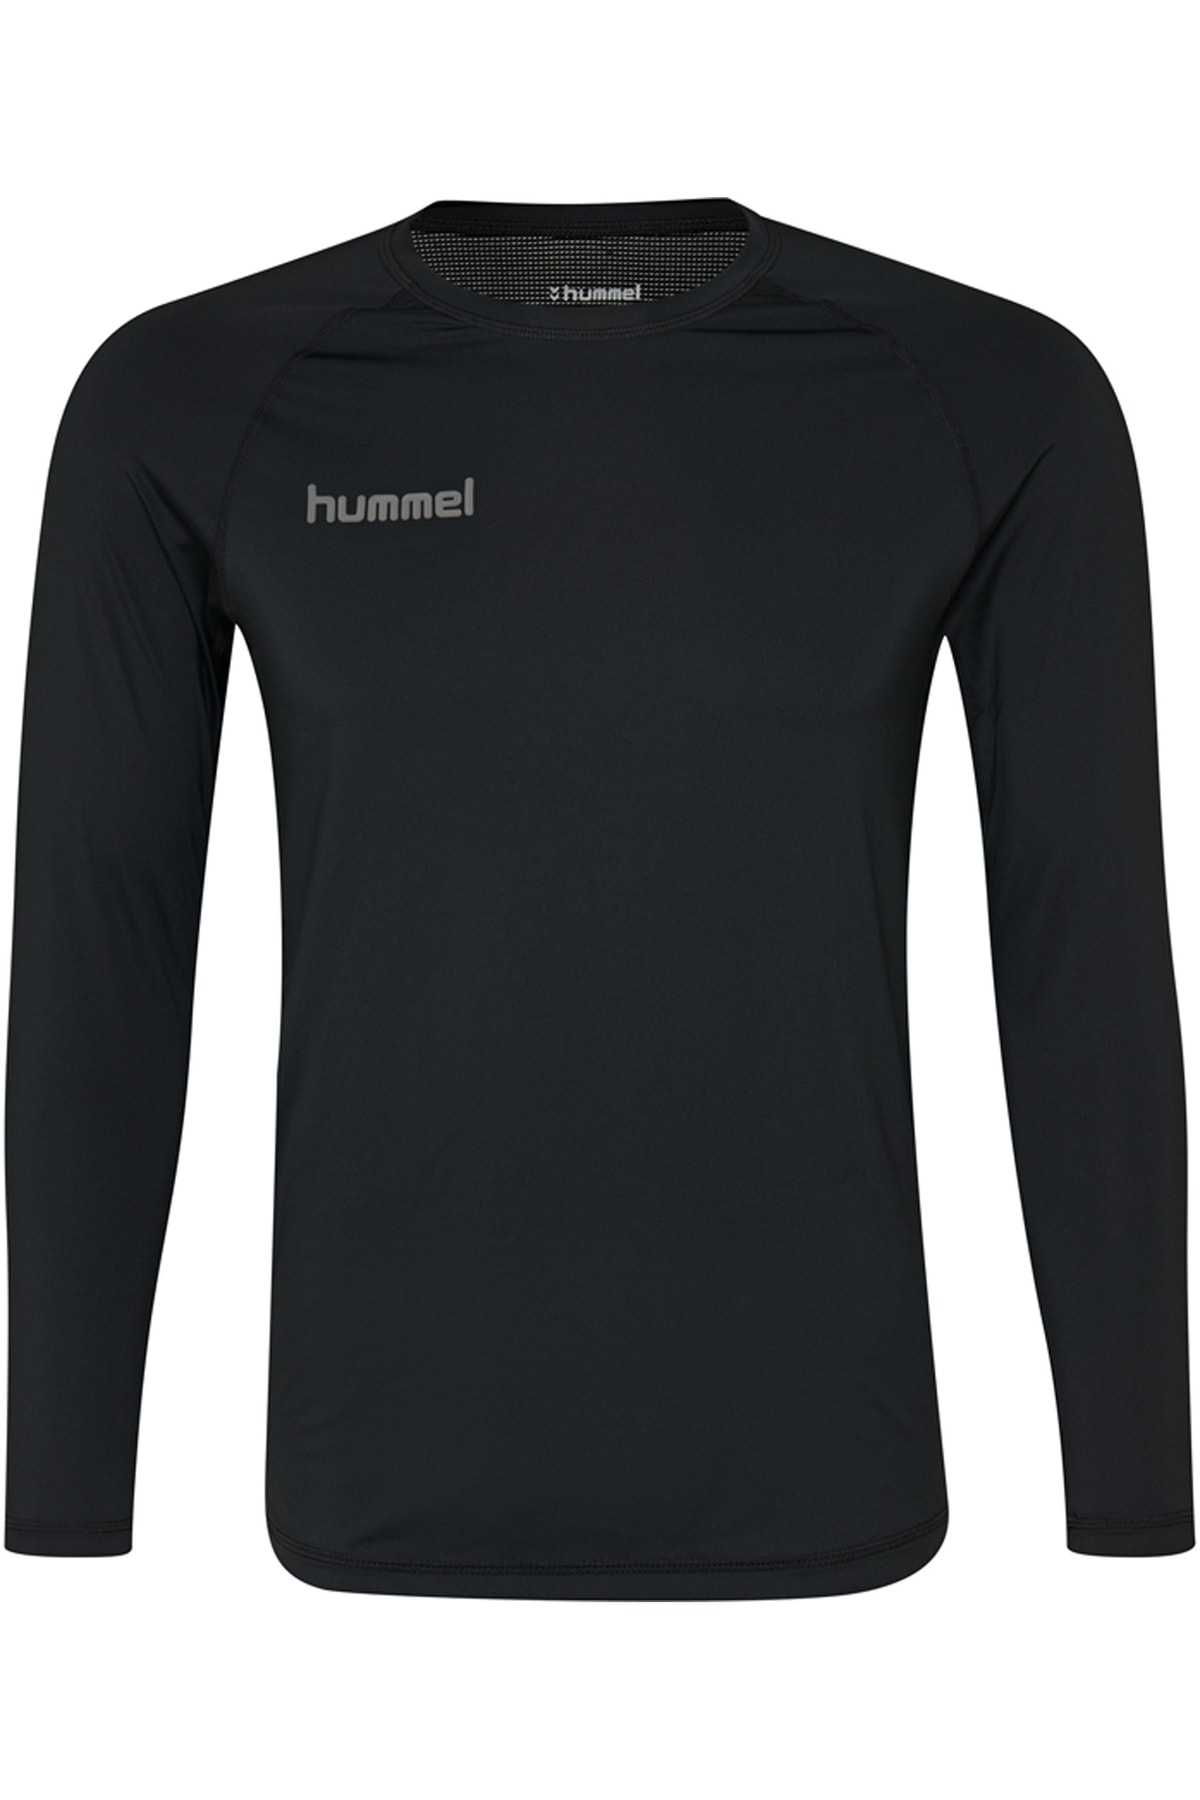 HUMMEL T-Shirt Schwarz Slim Fit